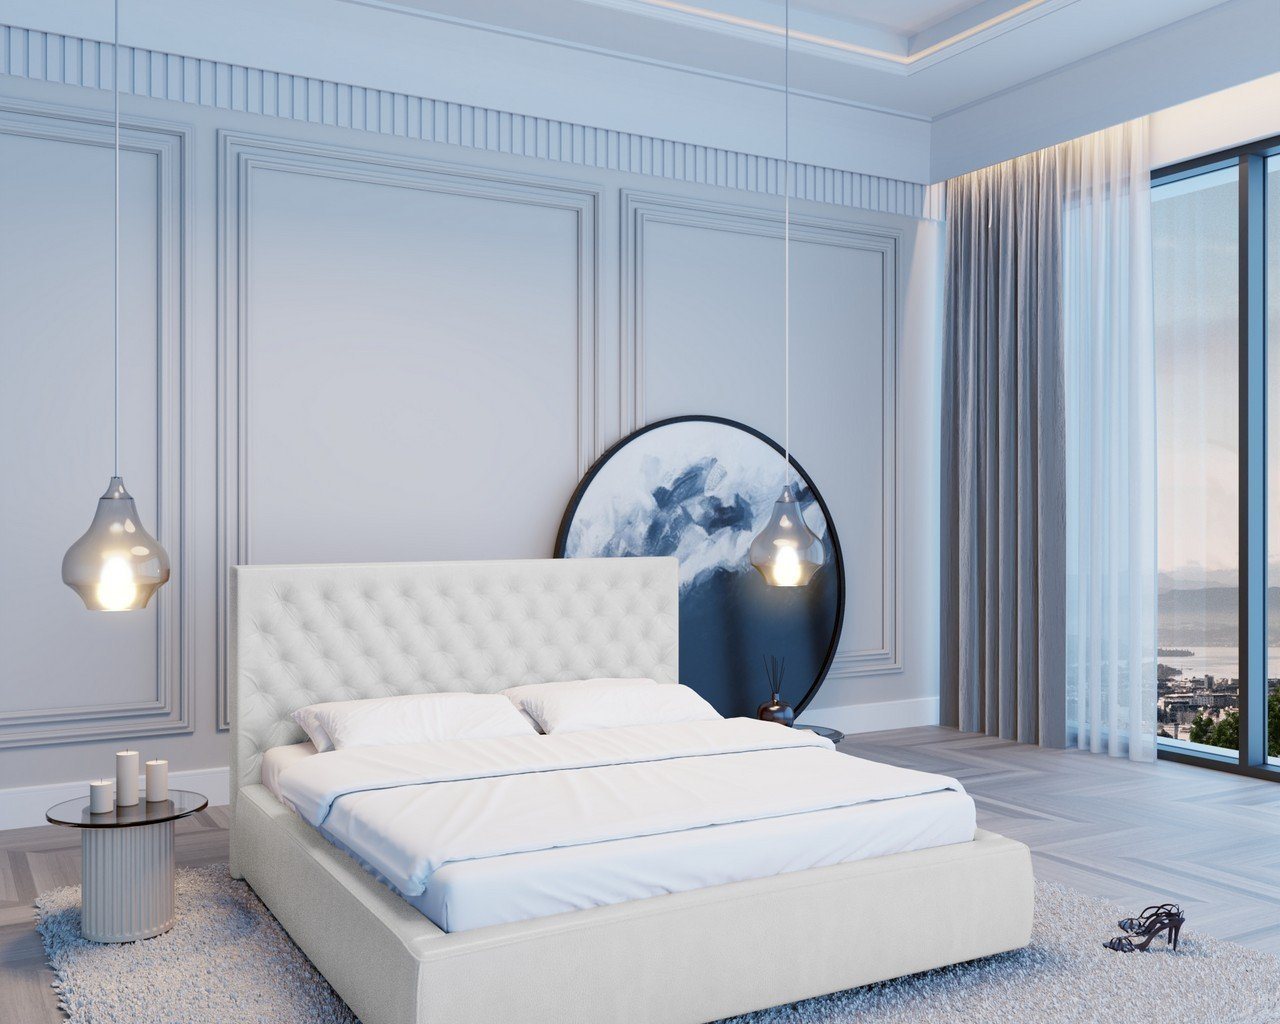 Sofa Dreams Polsterbett Olivos (Designerbett), Komplettbett Bett mit Bettkasten, inklusive Matratze und Topper von Sofa Dreams